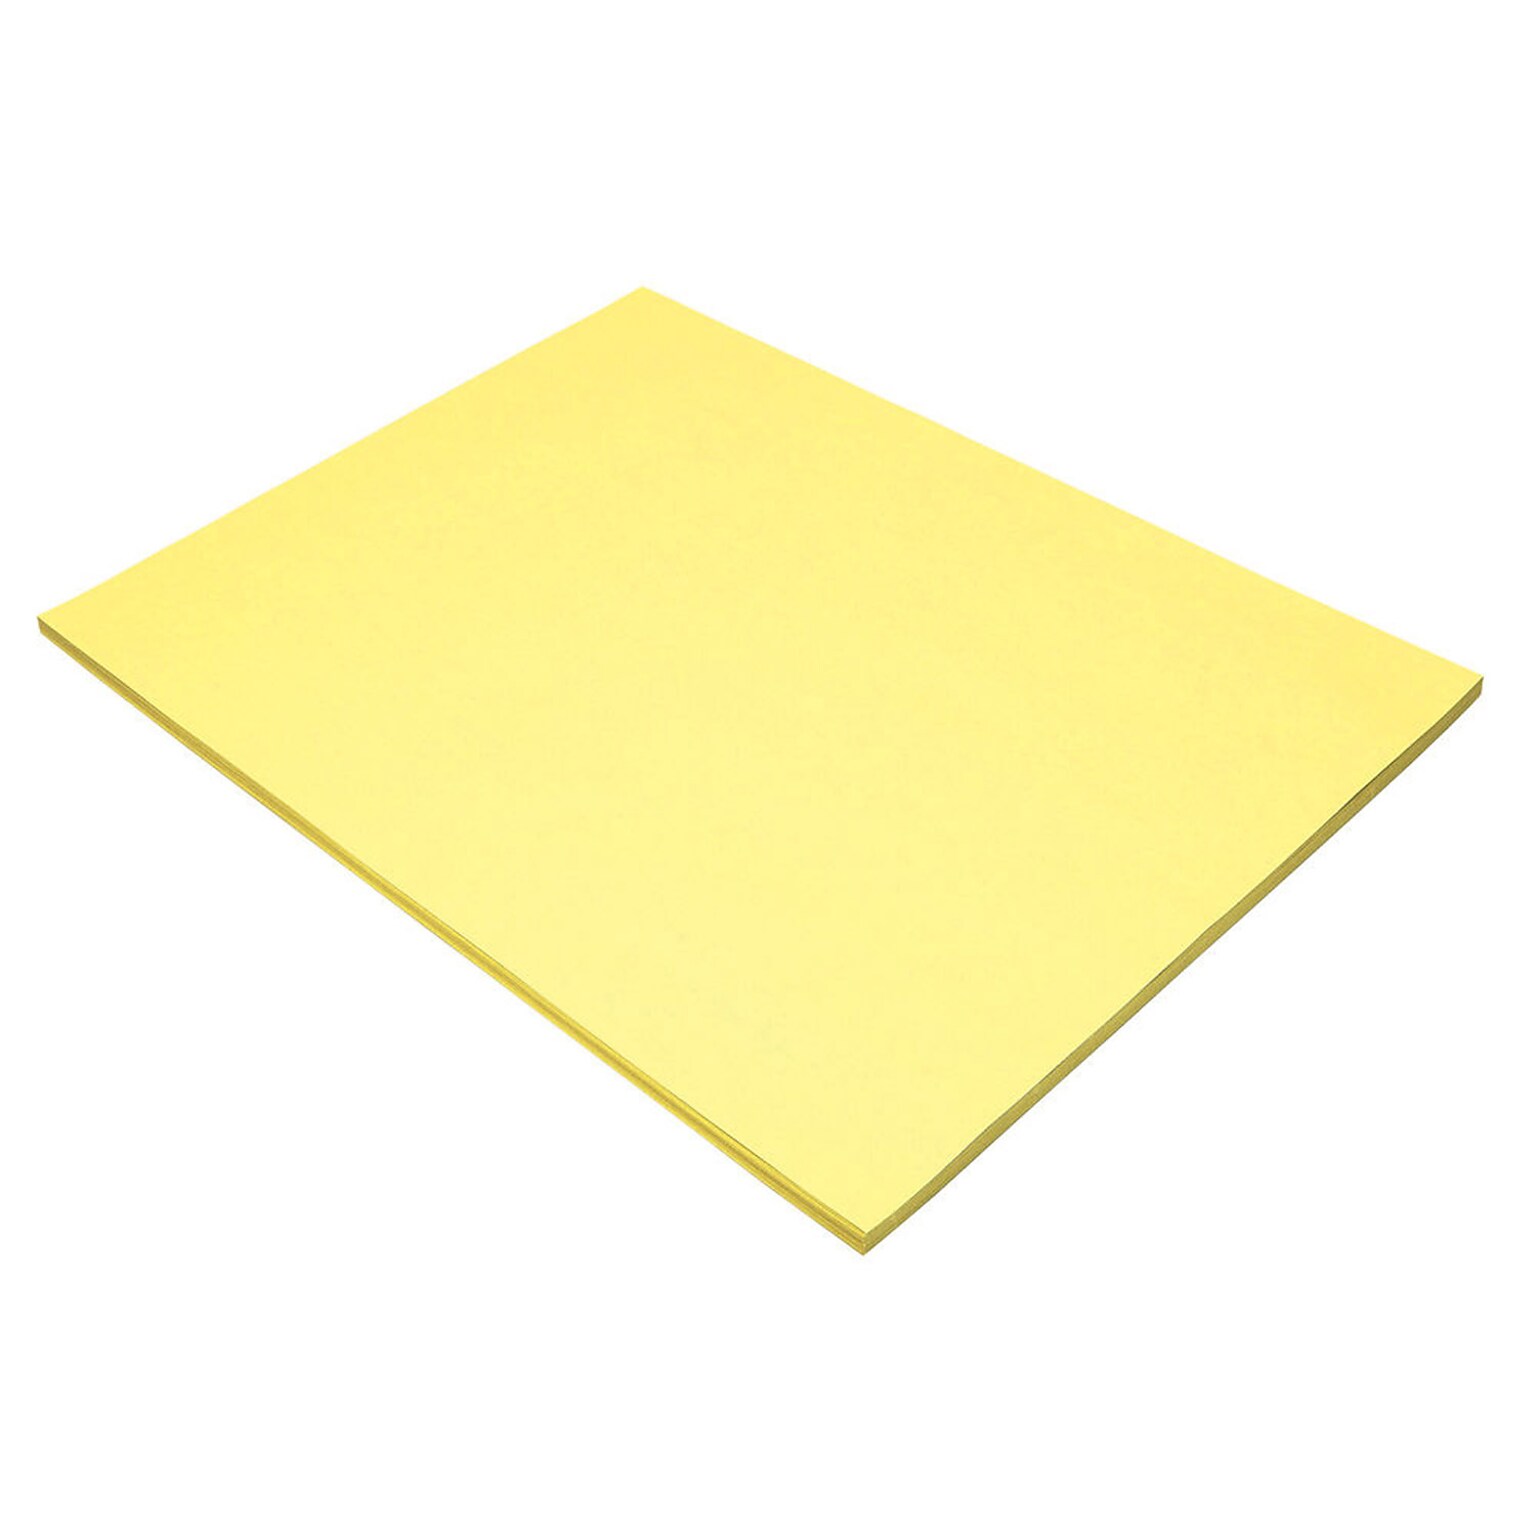 Pacon Tru-Ray 18 x 24 Construction Paper, Light Yellow, 50 Sheets (PAC103078)